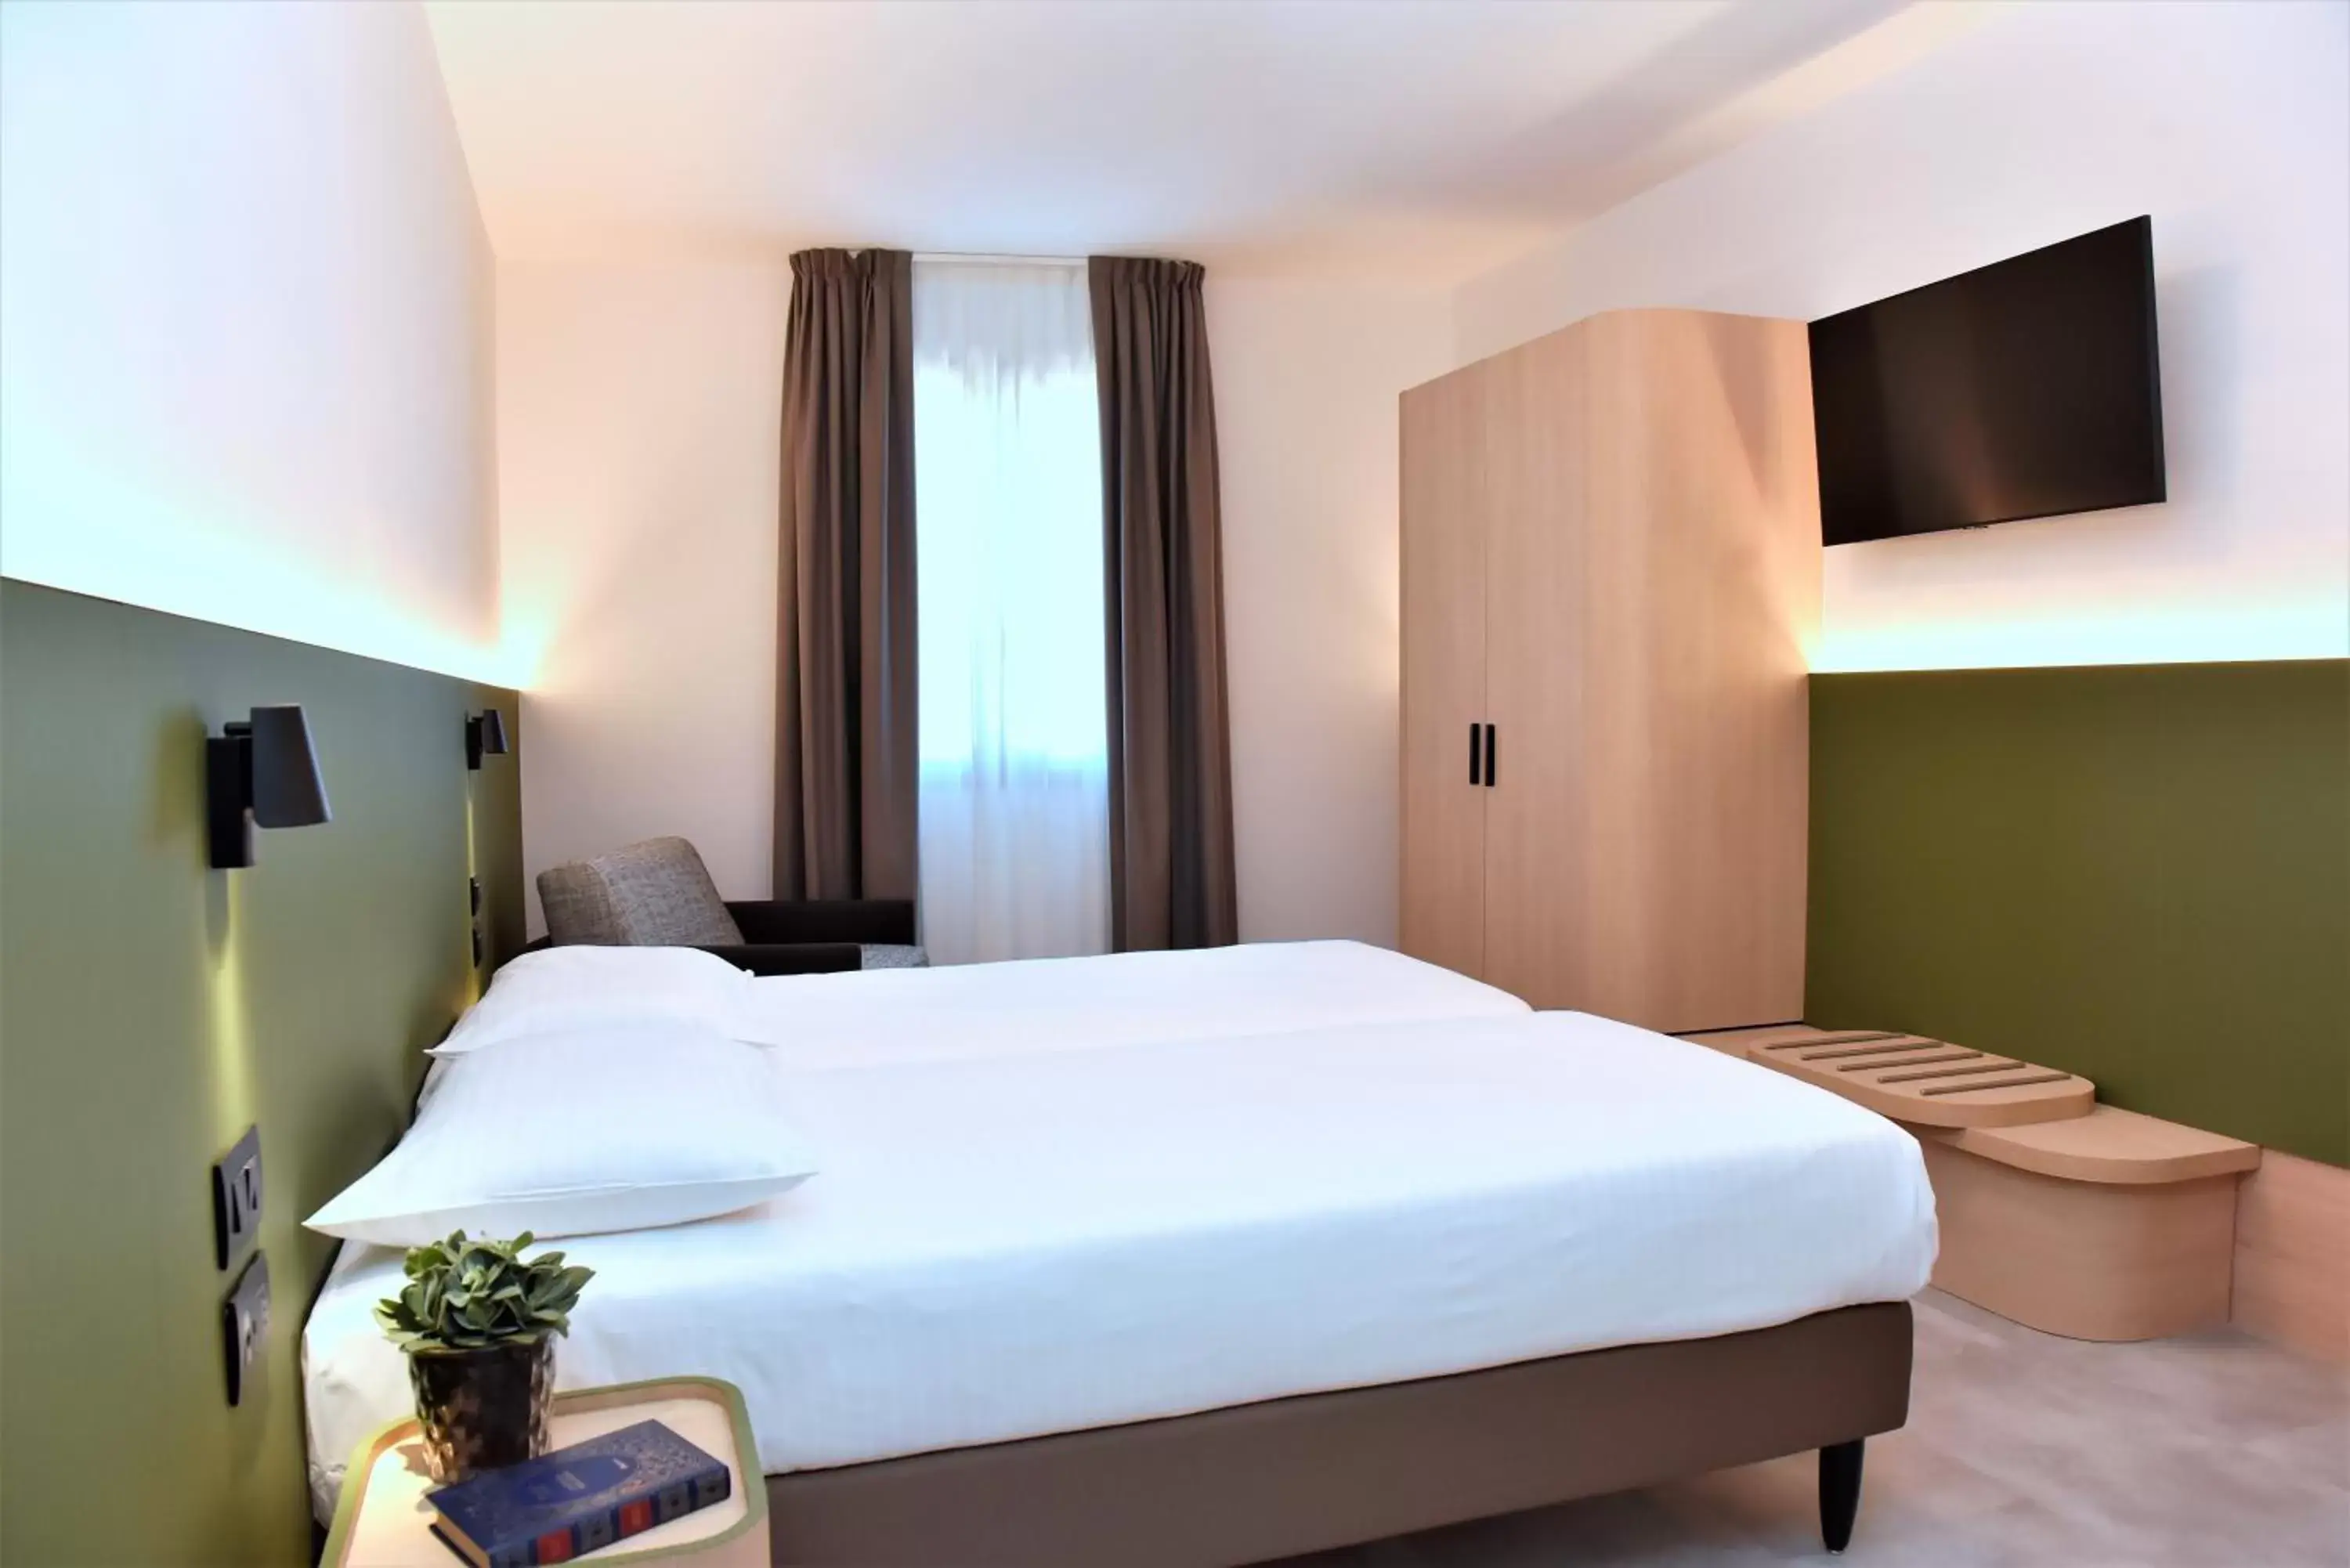 Bed, Room Photo in Hotel Casa Del Pellegrino